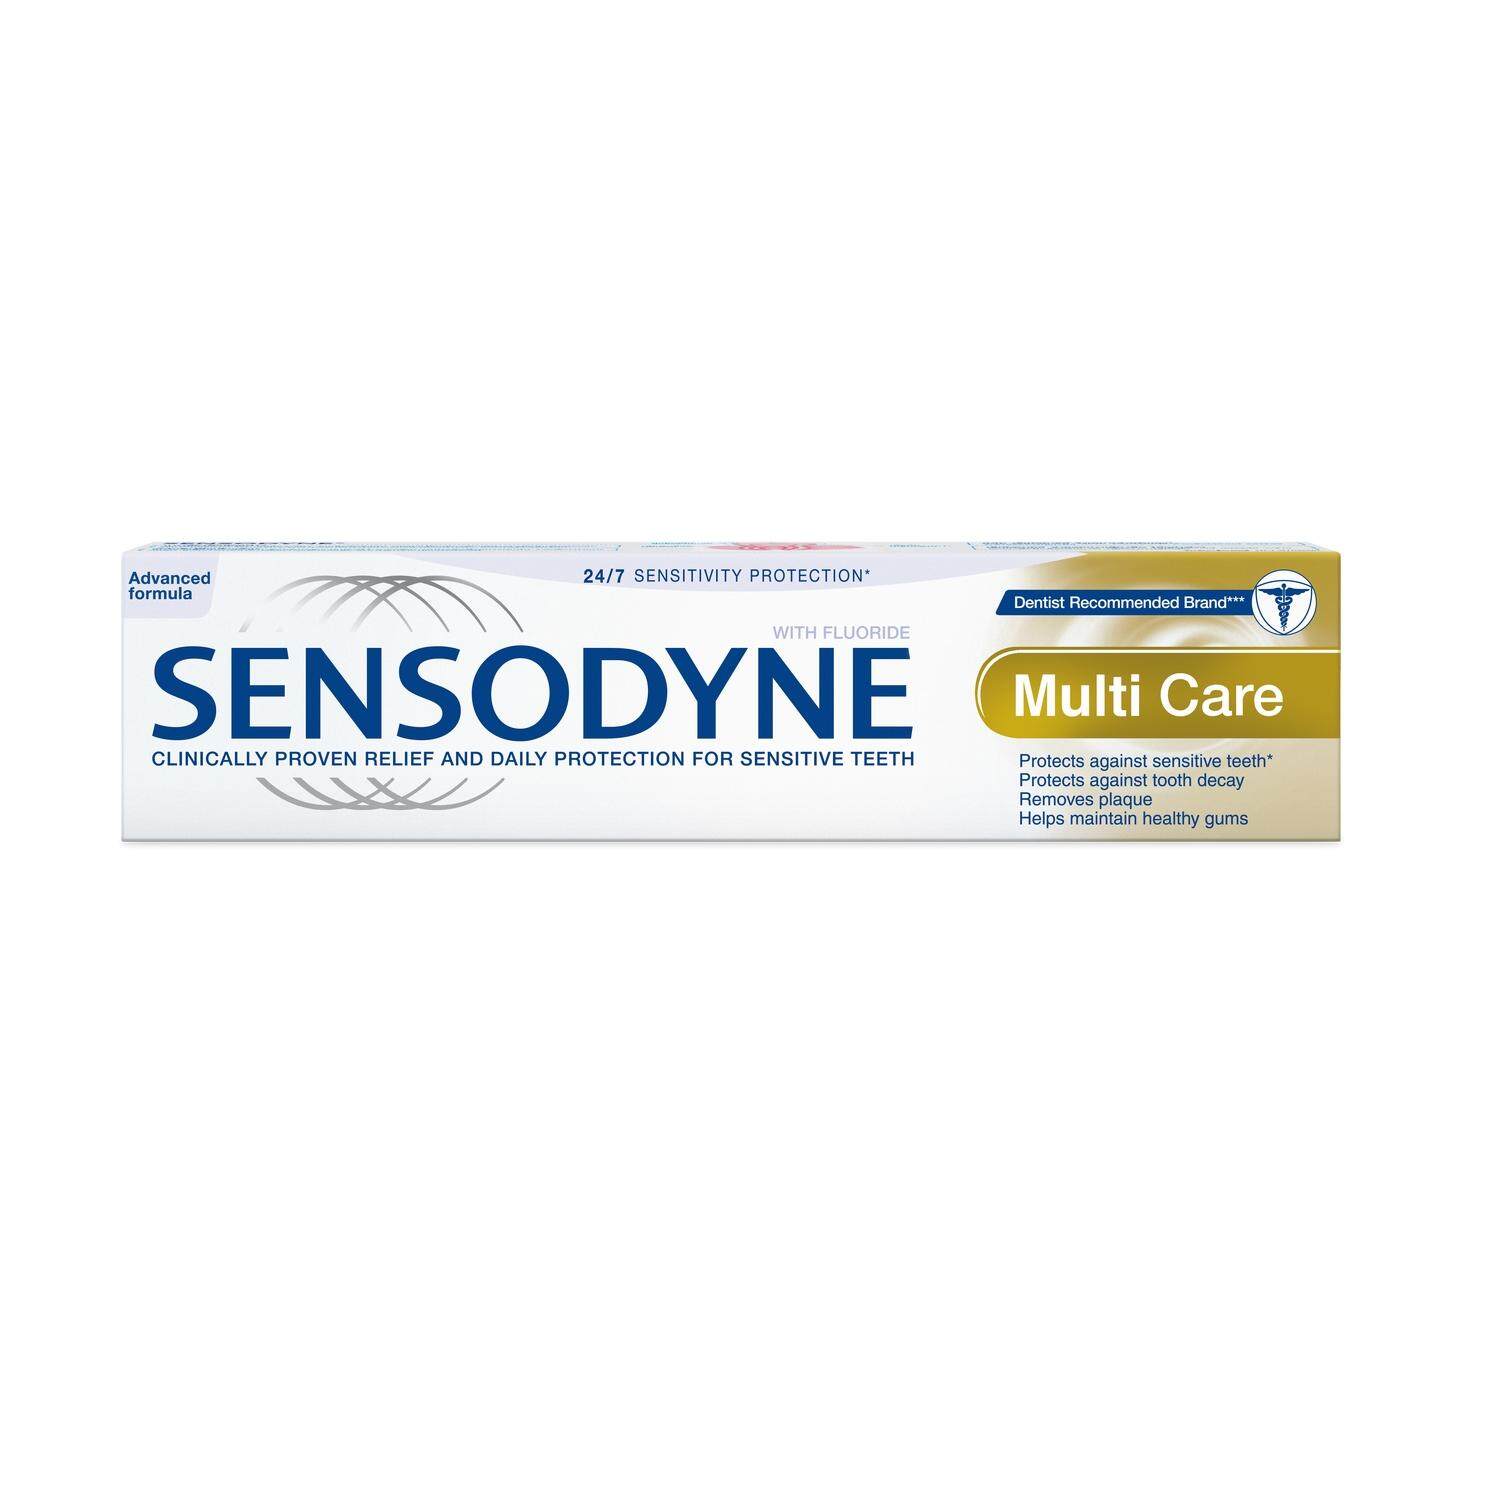 Sensodyne เซ็นโซดายน์ ยาสีฟัน สูตรมัลติ แคร์ 160 กรัม (Oral,Oral Care,Toothpaste,ยาสีฟัน,ดูแลฟัน,ช่องปาก,สุขภาพฟัน) ของแท้